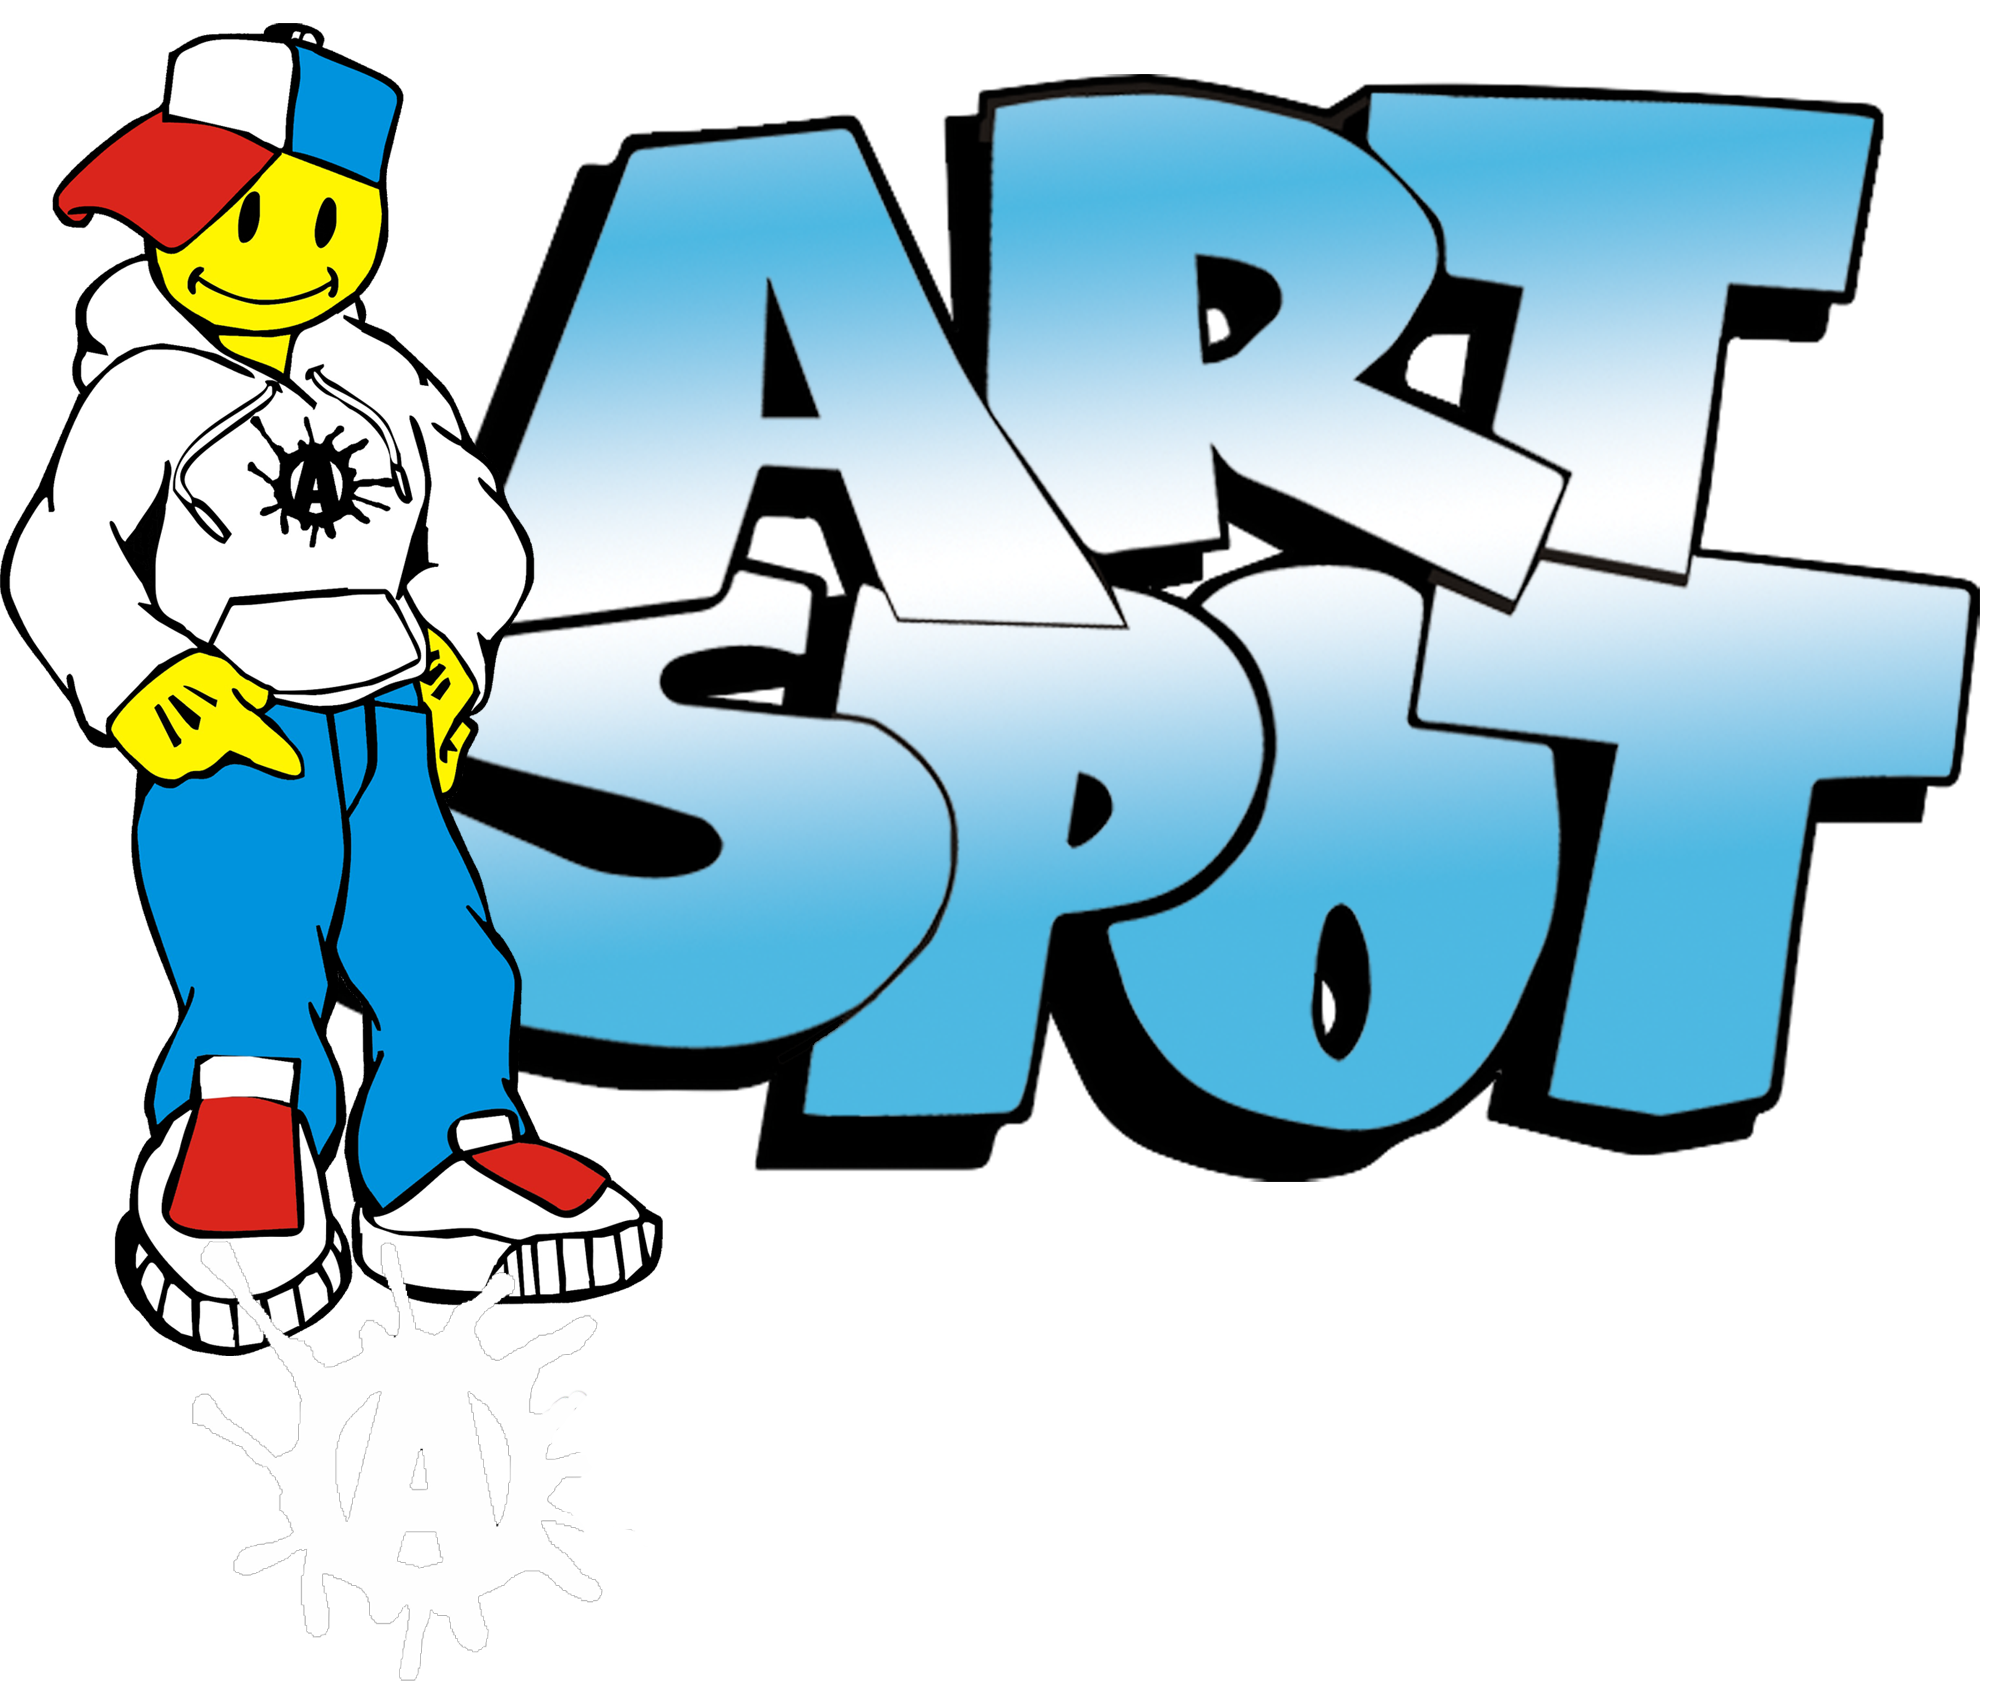 Art Spot Airbrush Logo